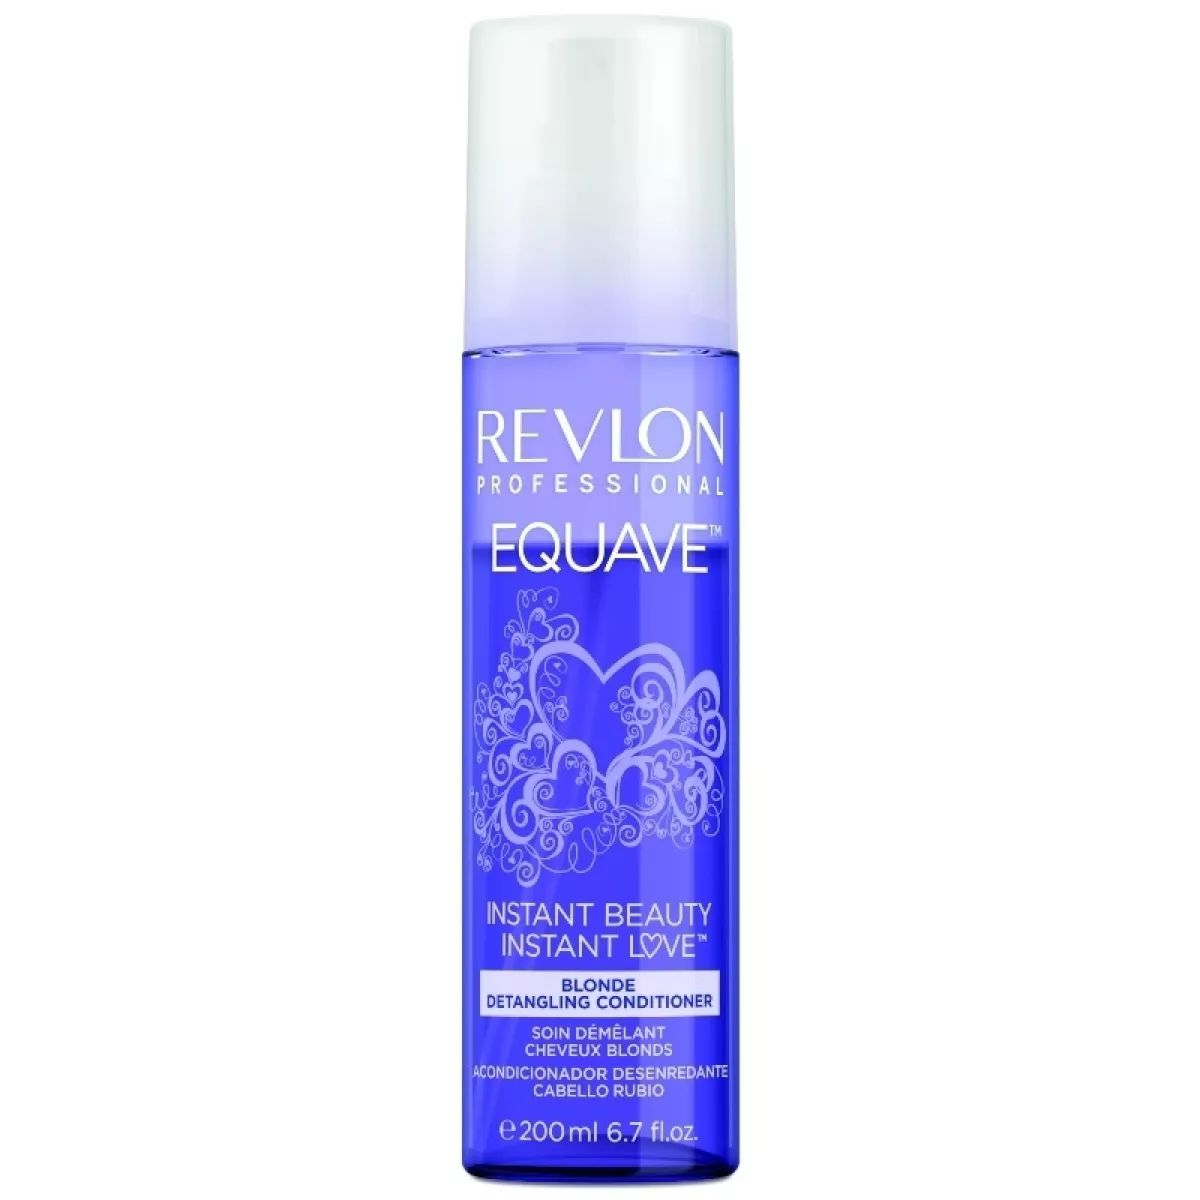 #1 - Revlon Equave Instant Beauty Blonde Detangling Conditioner 200 ml